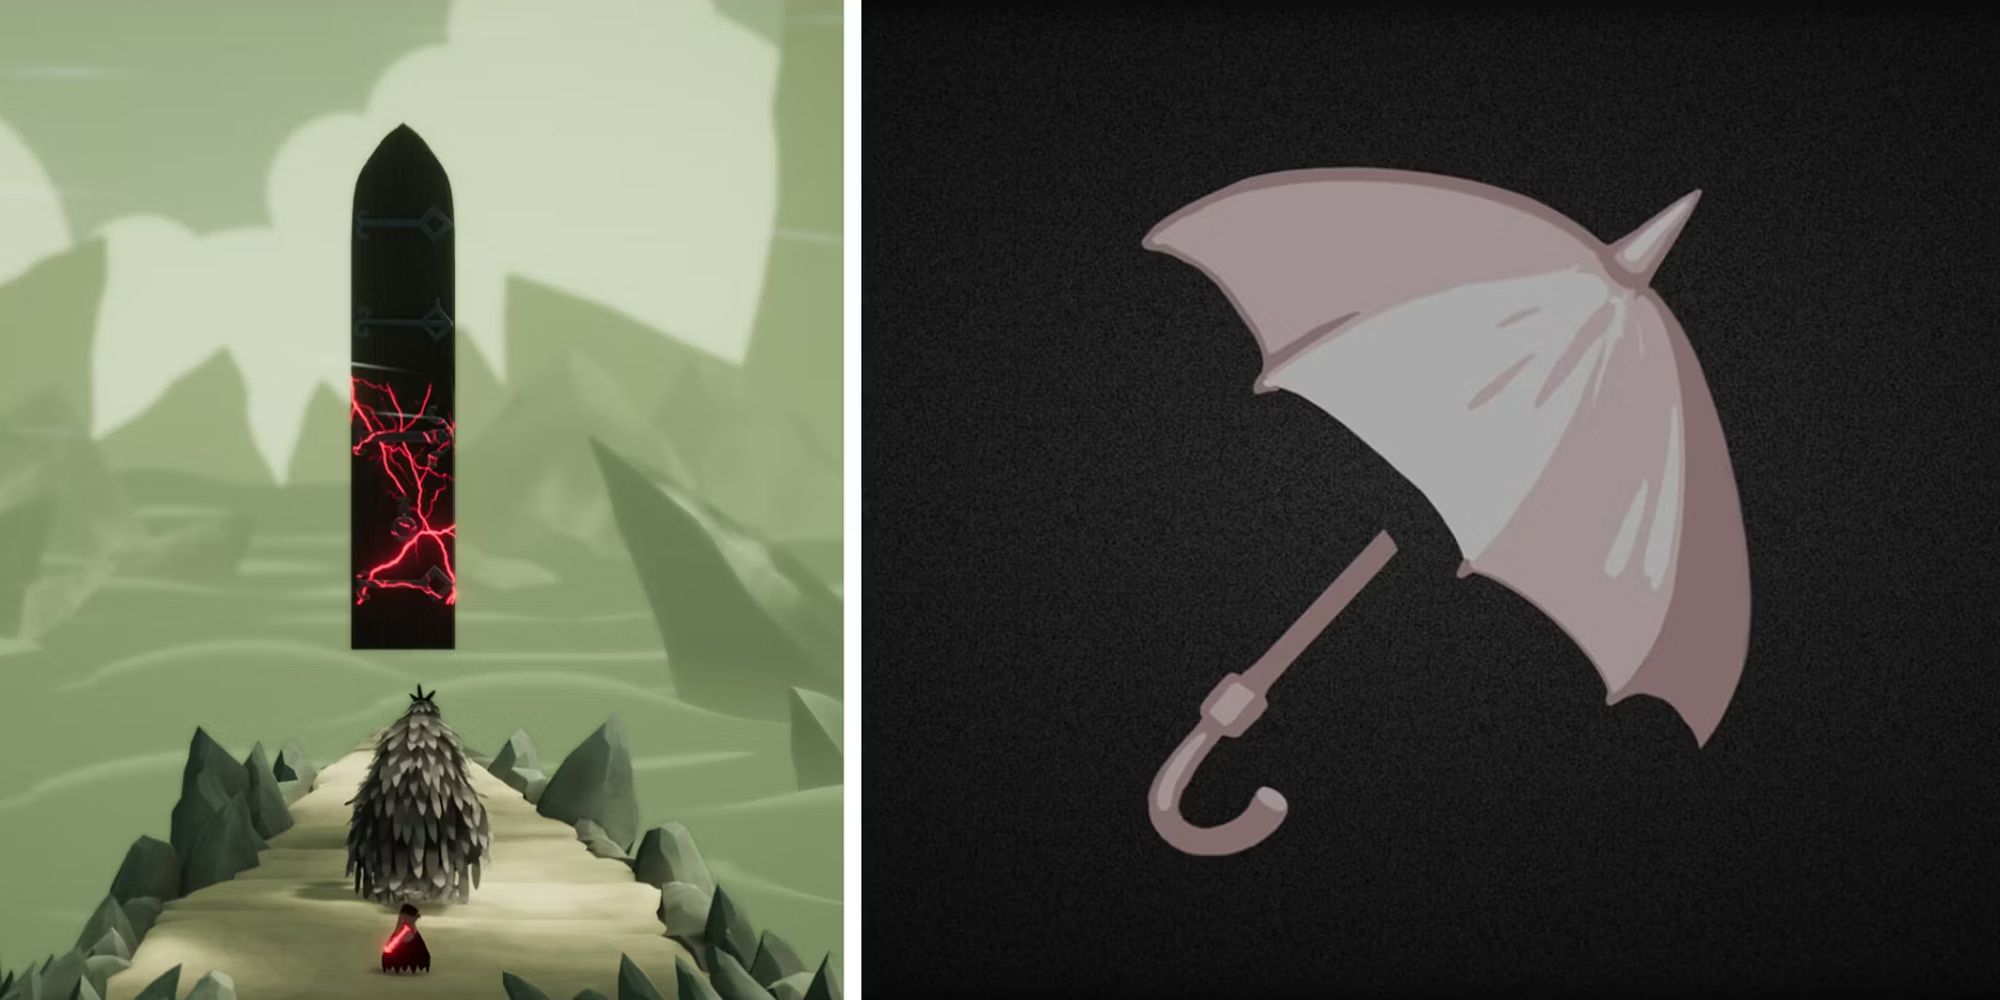 A Split Image Depicting Scenes From Death's Door And The Umbrella